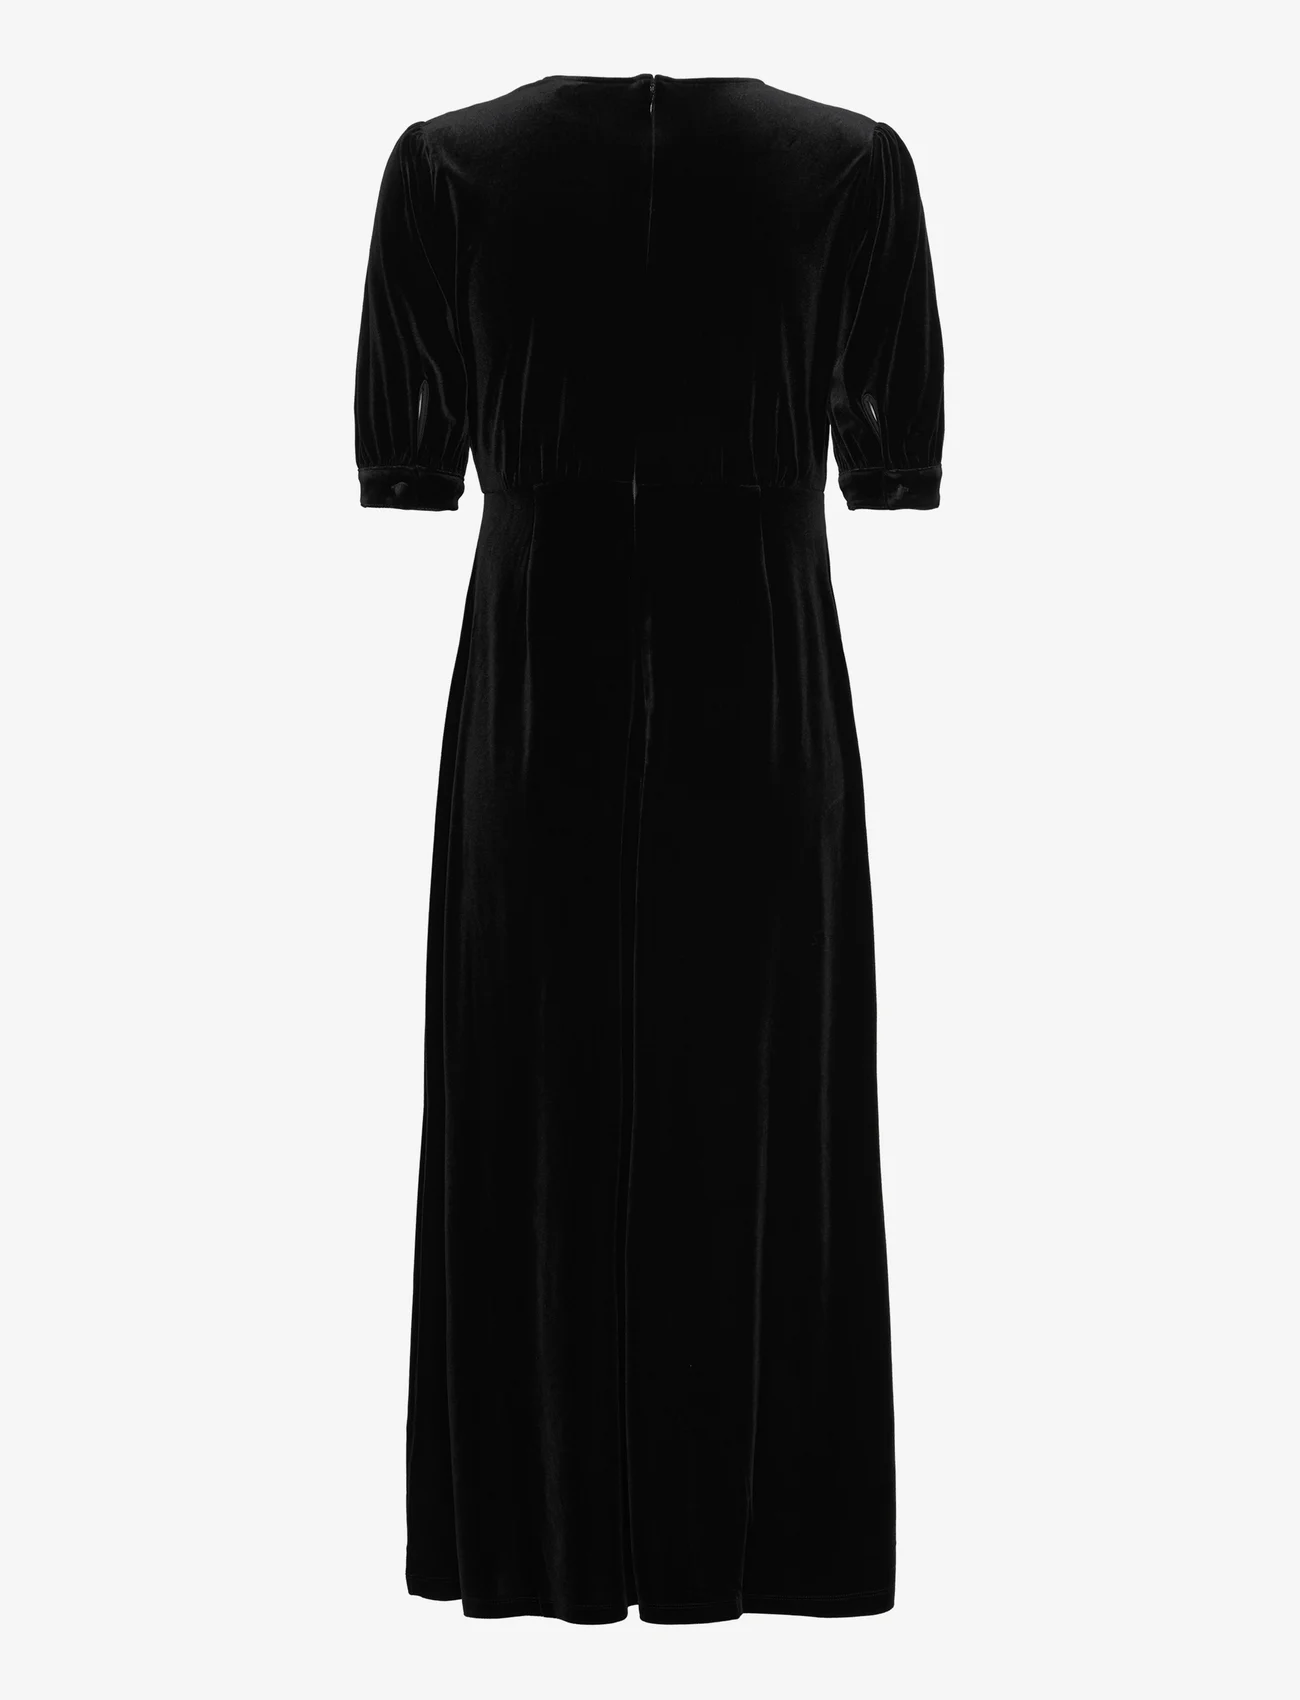 Lauren Ralph Lauren - Stretch Velvet Puff-Sleeve Midi Dress - vakarėlių drabužiai išparduotuvių kainomis - black velvet - 1